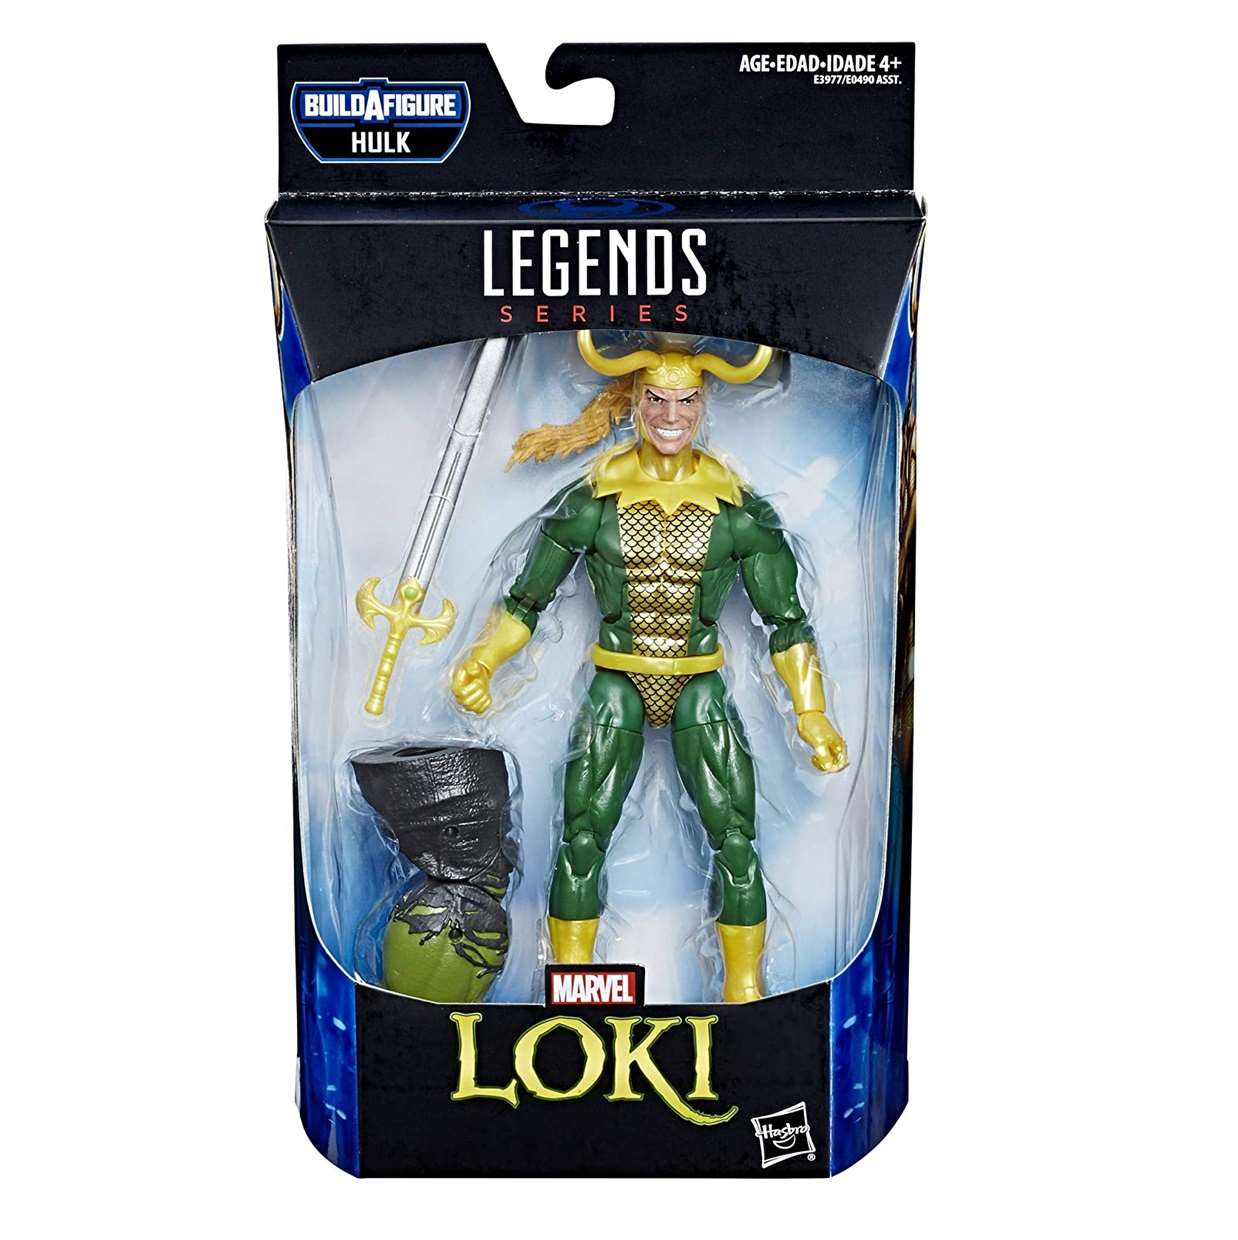 Loki Figura Marvel B A F Hulk Legends Series 6 Pulg